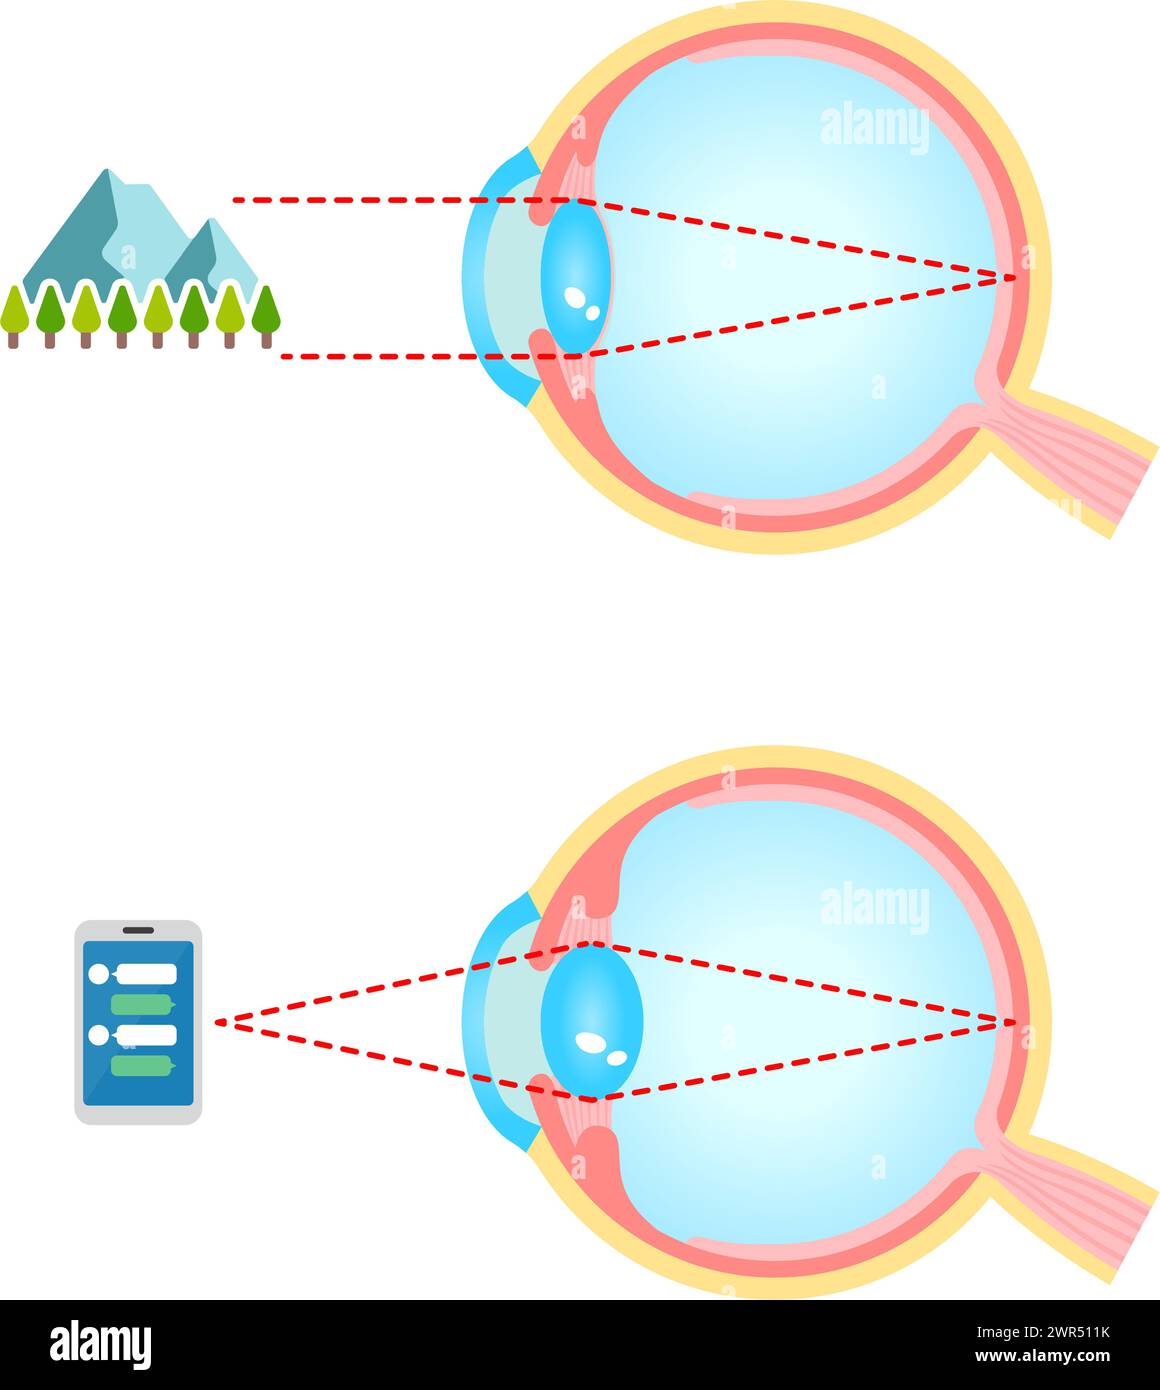 Mechanism of eyeball for looking far and near. Vector illustration. Stock Vector